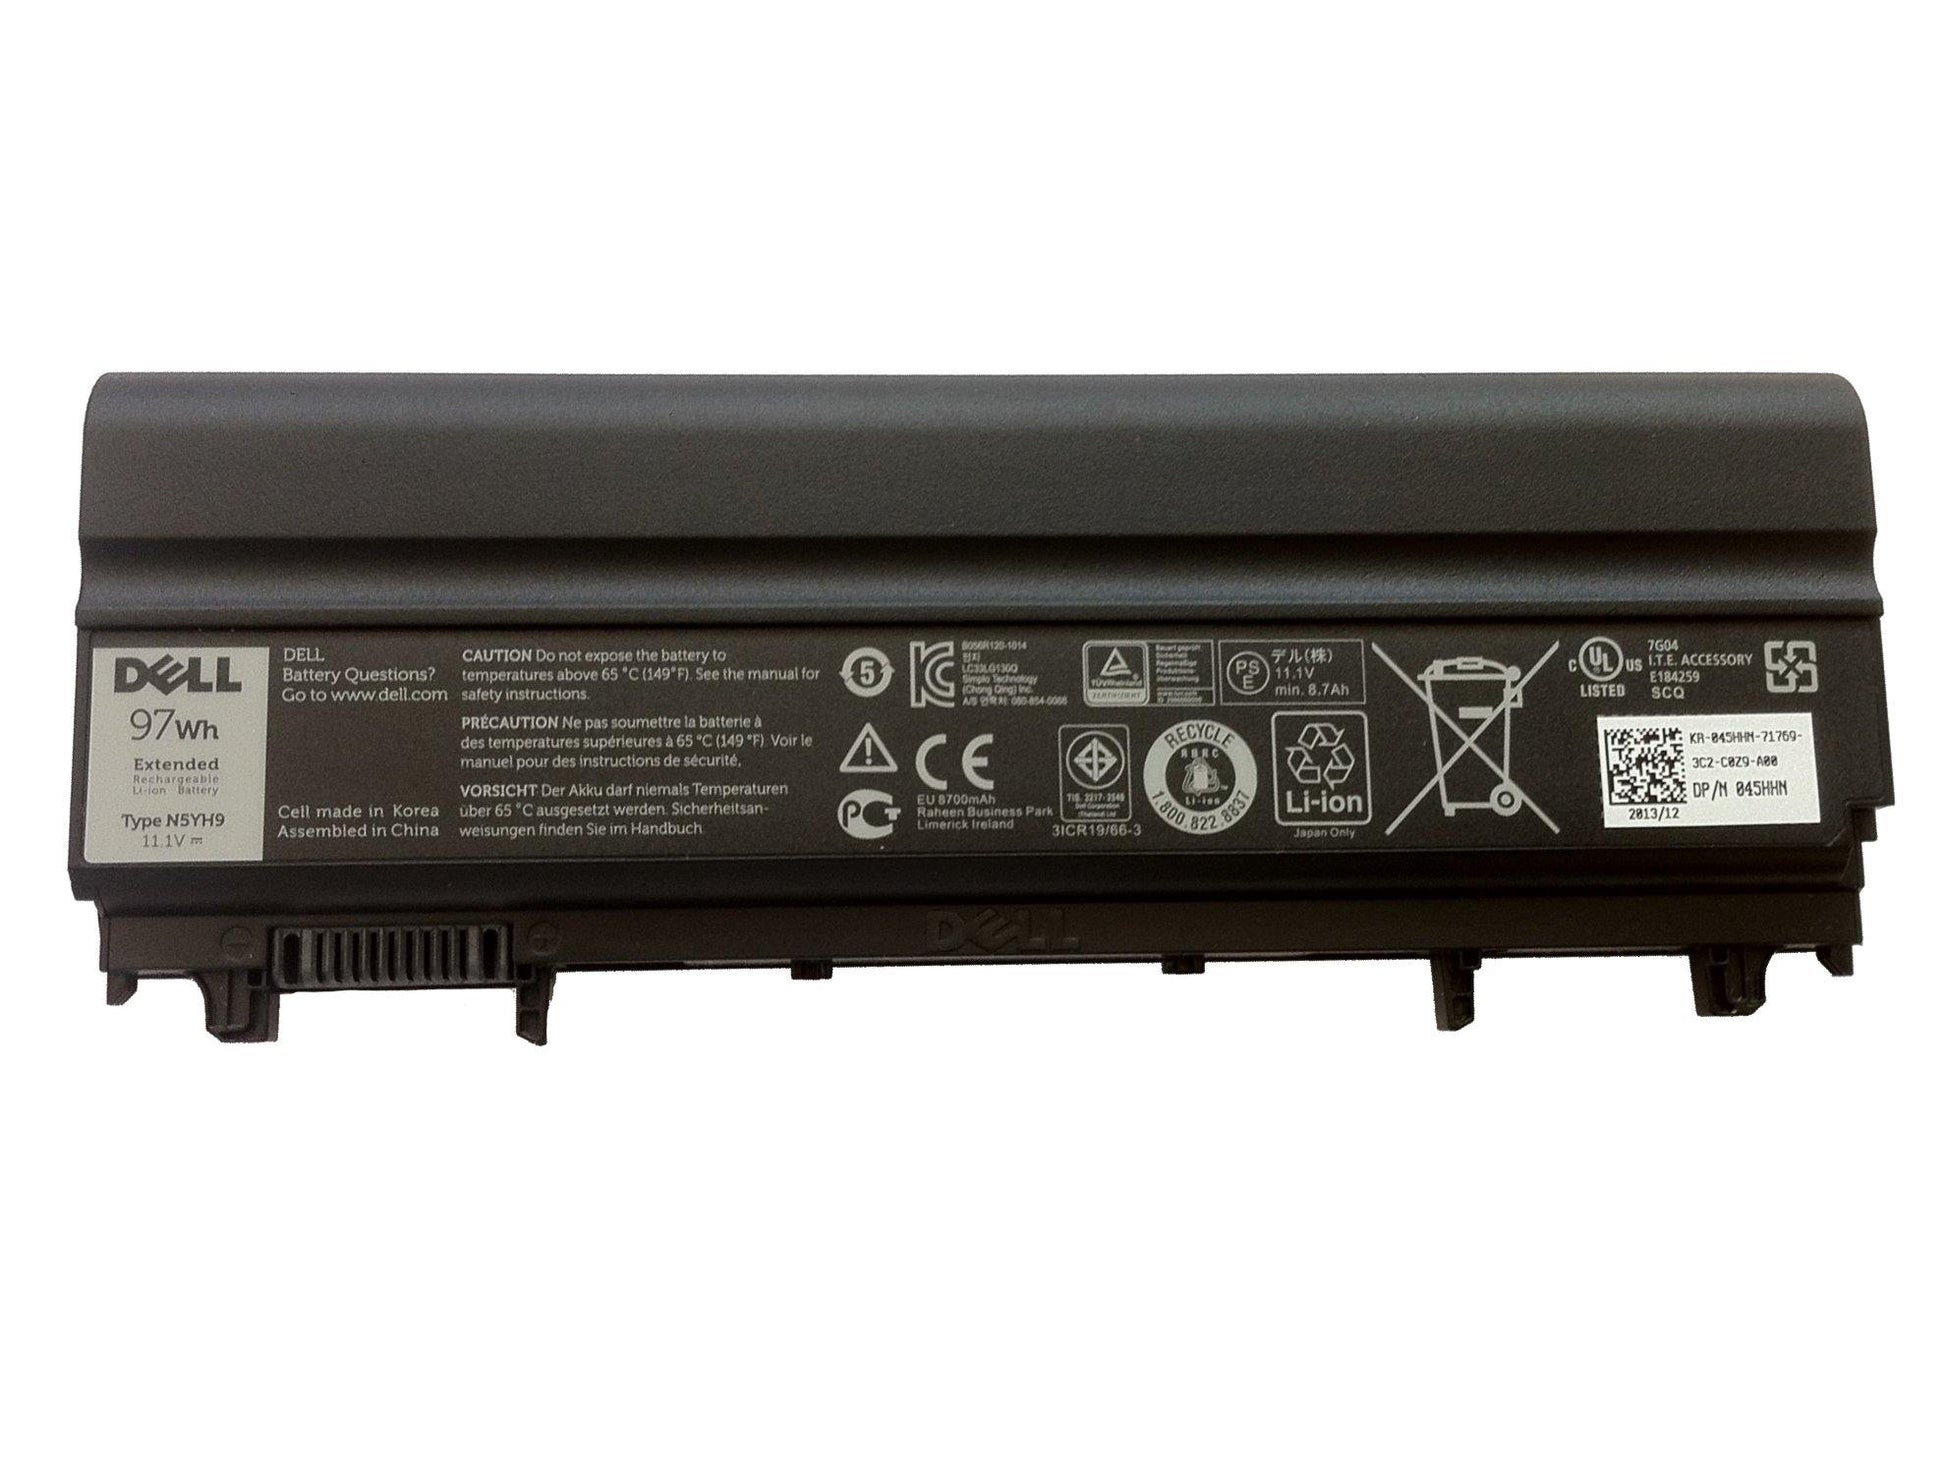 Dell Latitude E5440, E5540 9 Cell 97Wh Laptop Battery Type N5YH9 45HHN | Black Cat PC